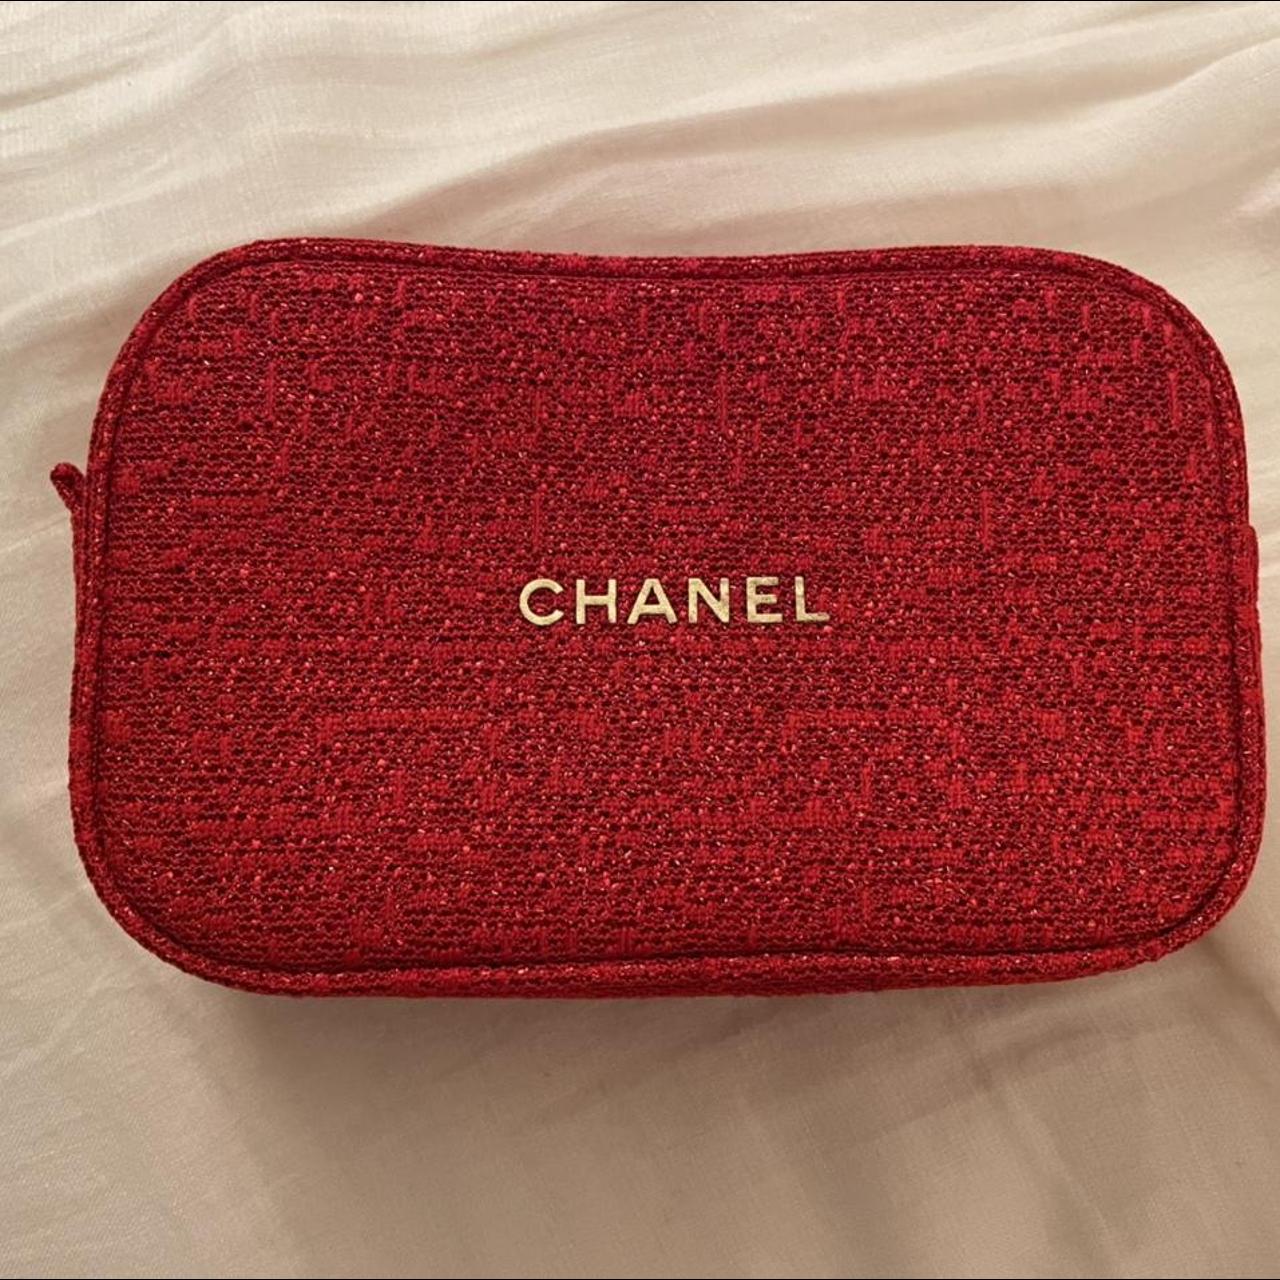 Chanel Holiday 2021 makeup bag. Brand new, bag only.